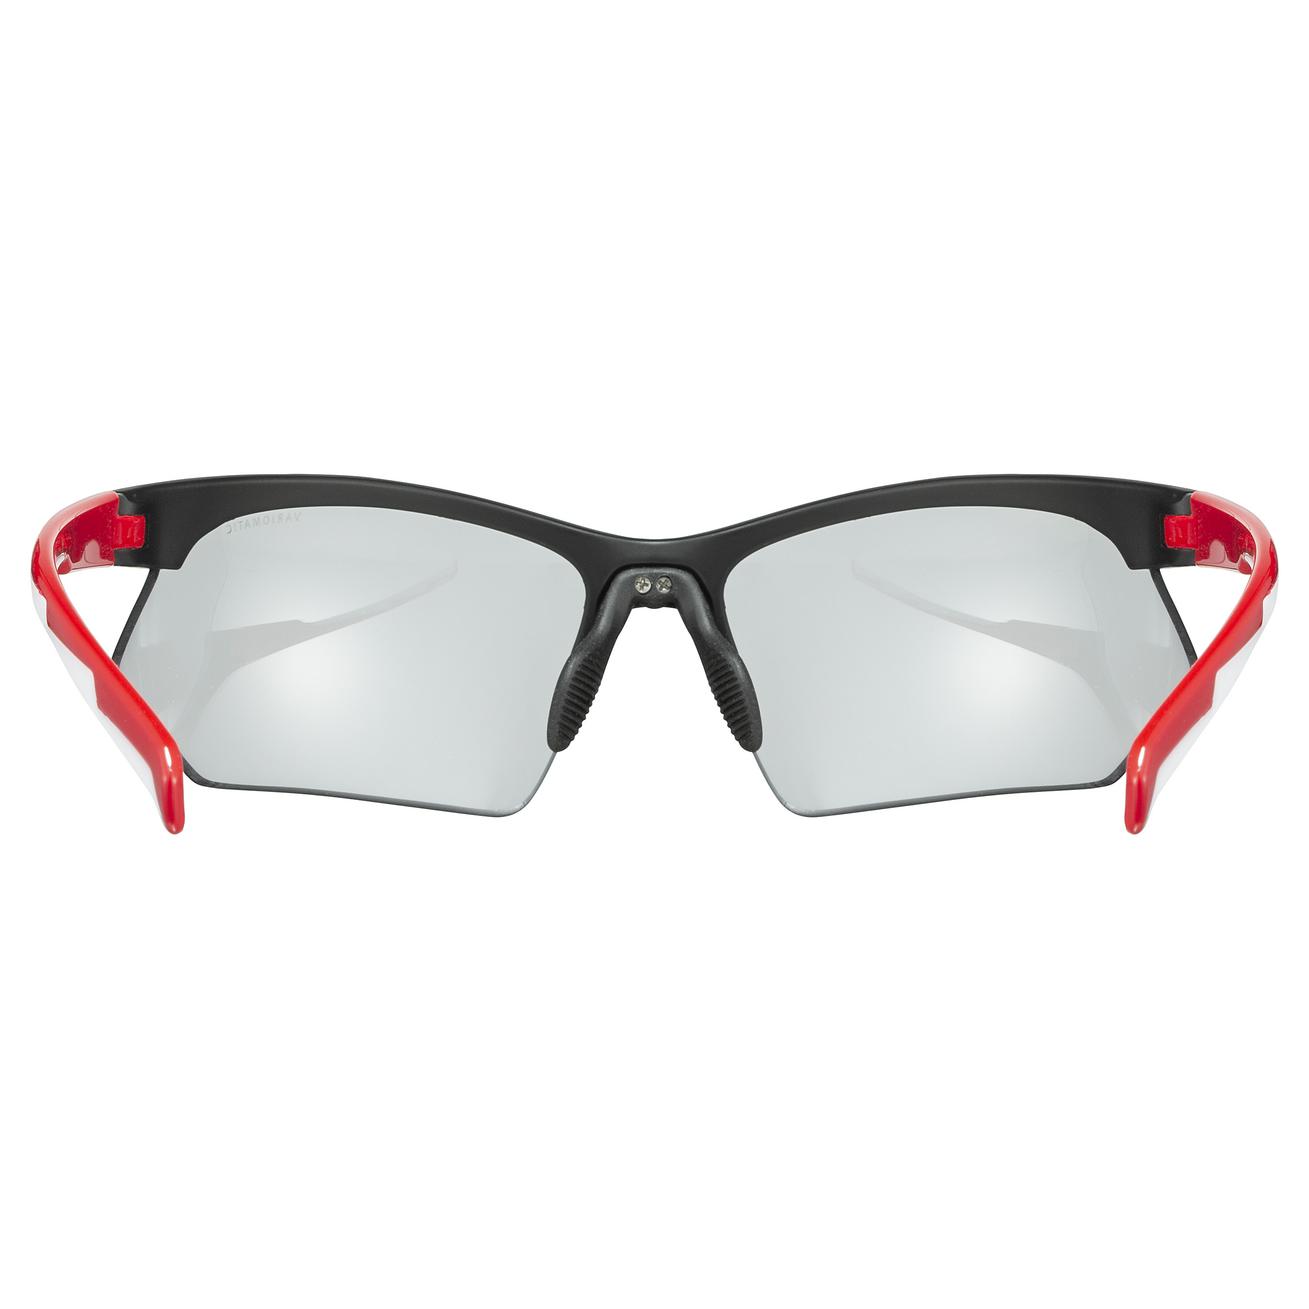 Photochromatic Lenses Cat 1-3 UVEX Sportstyle 802 Variomatic Sunglasses Case 